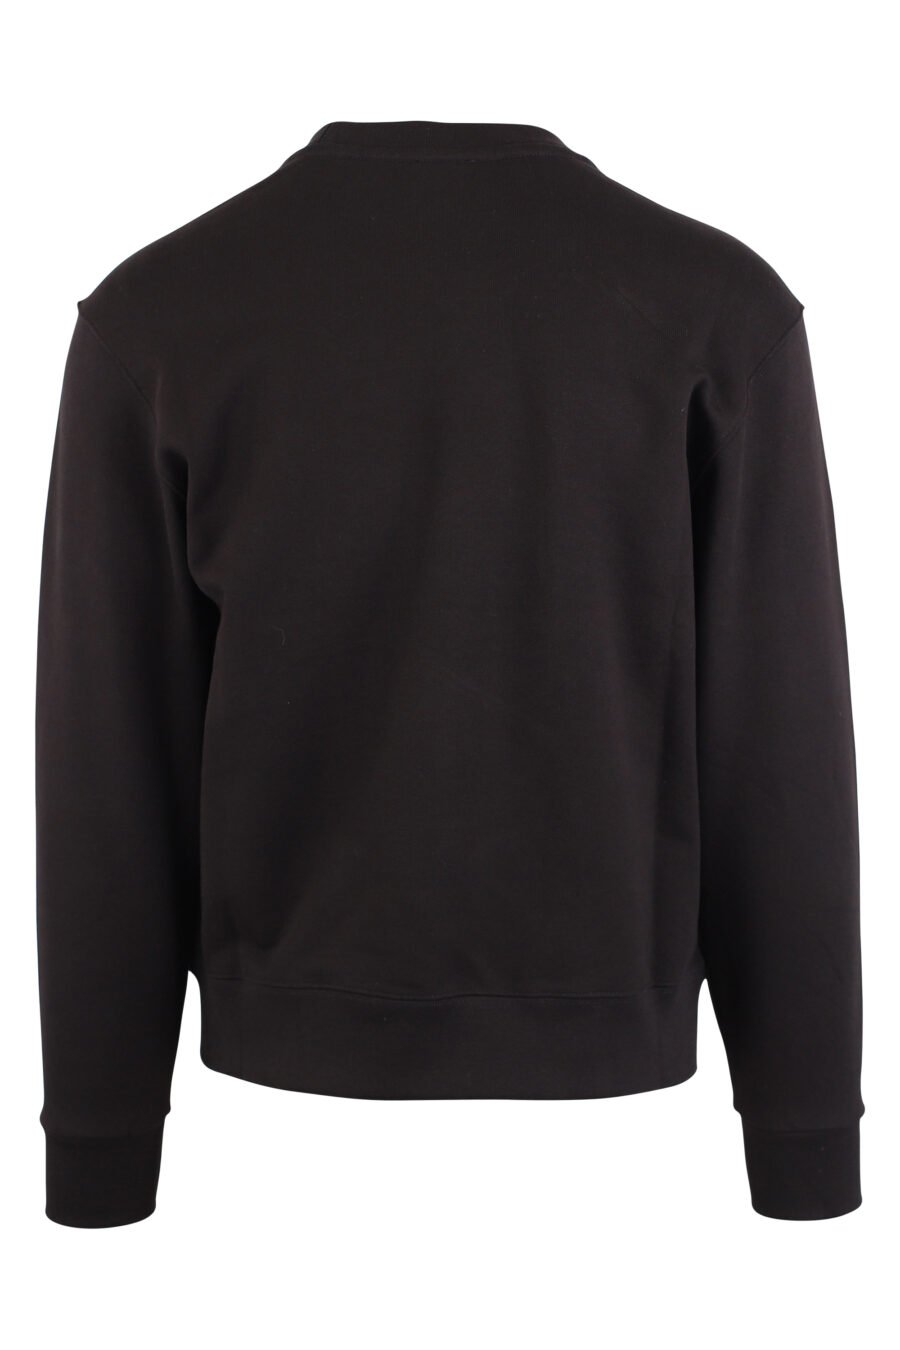 Black sweatshirt with orange "paris classic" maxilogo - IMG 9394